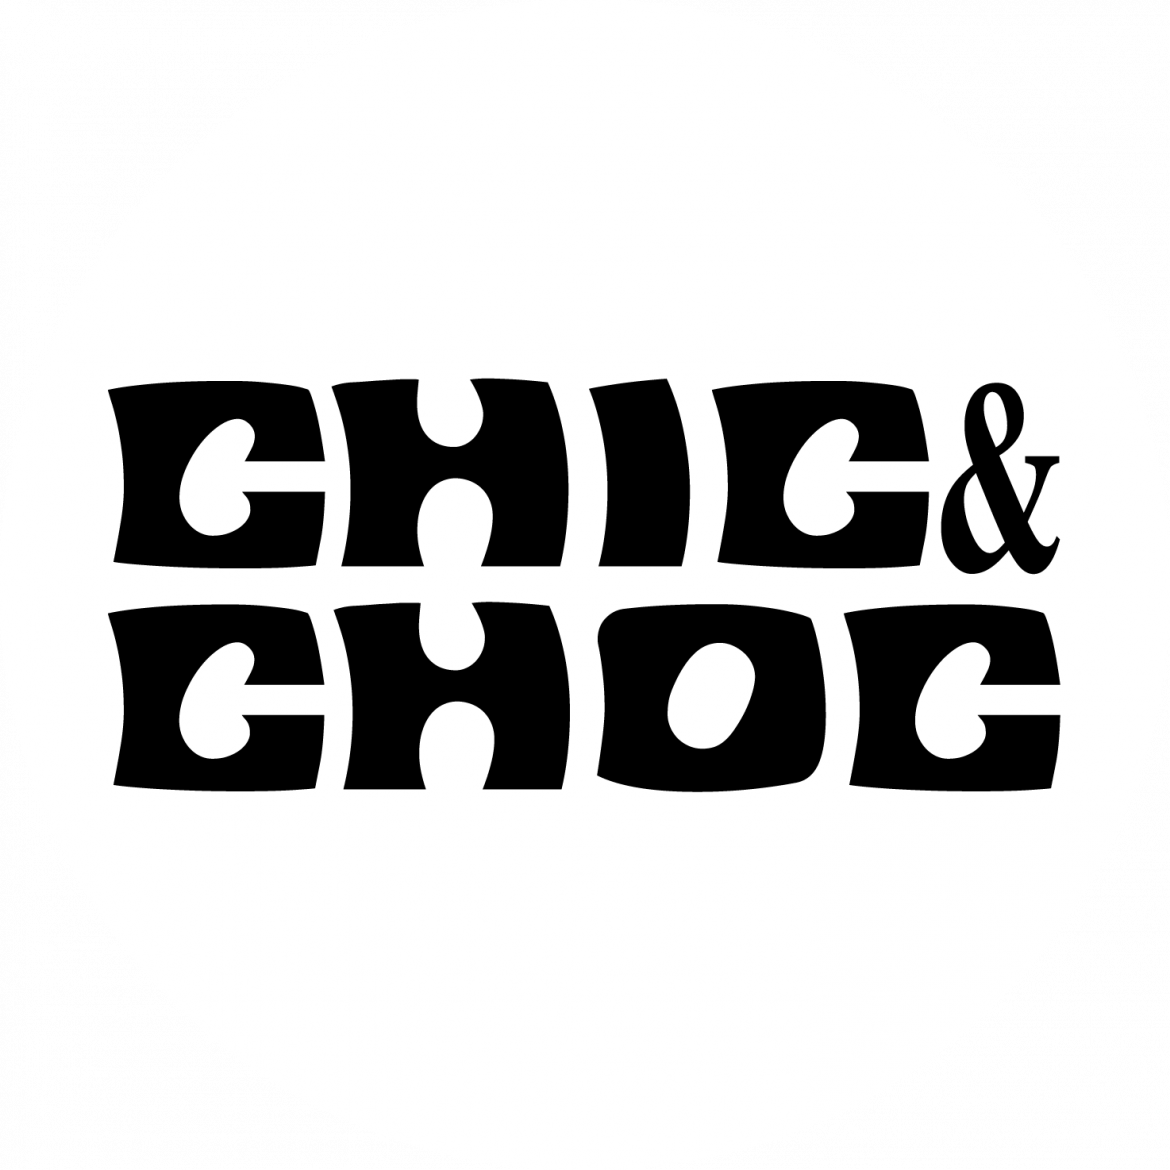 Chic-Choc.png